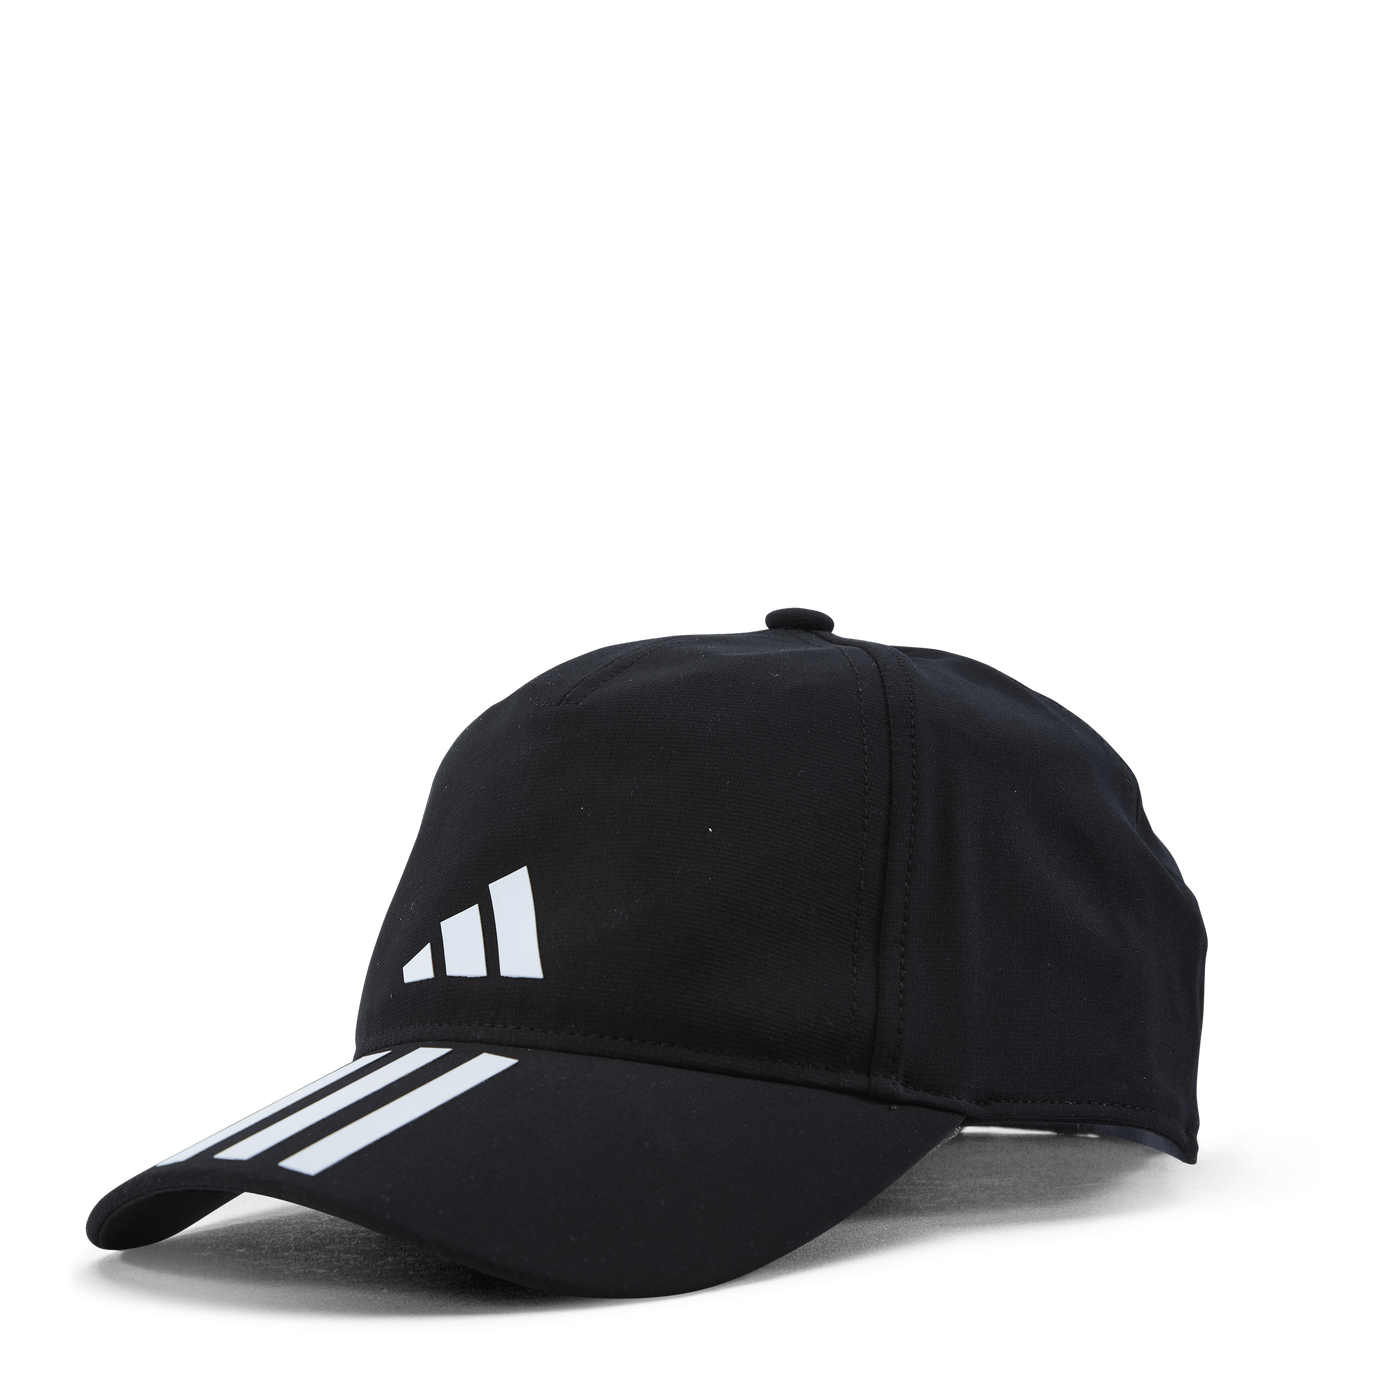 Adidas Baseball Cap 3-stripes  Black